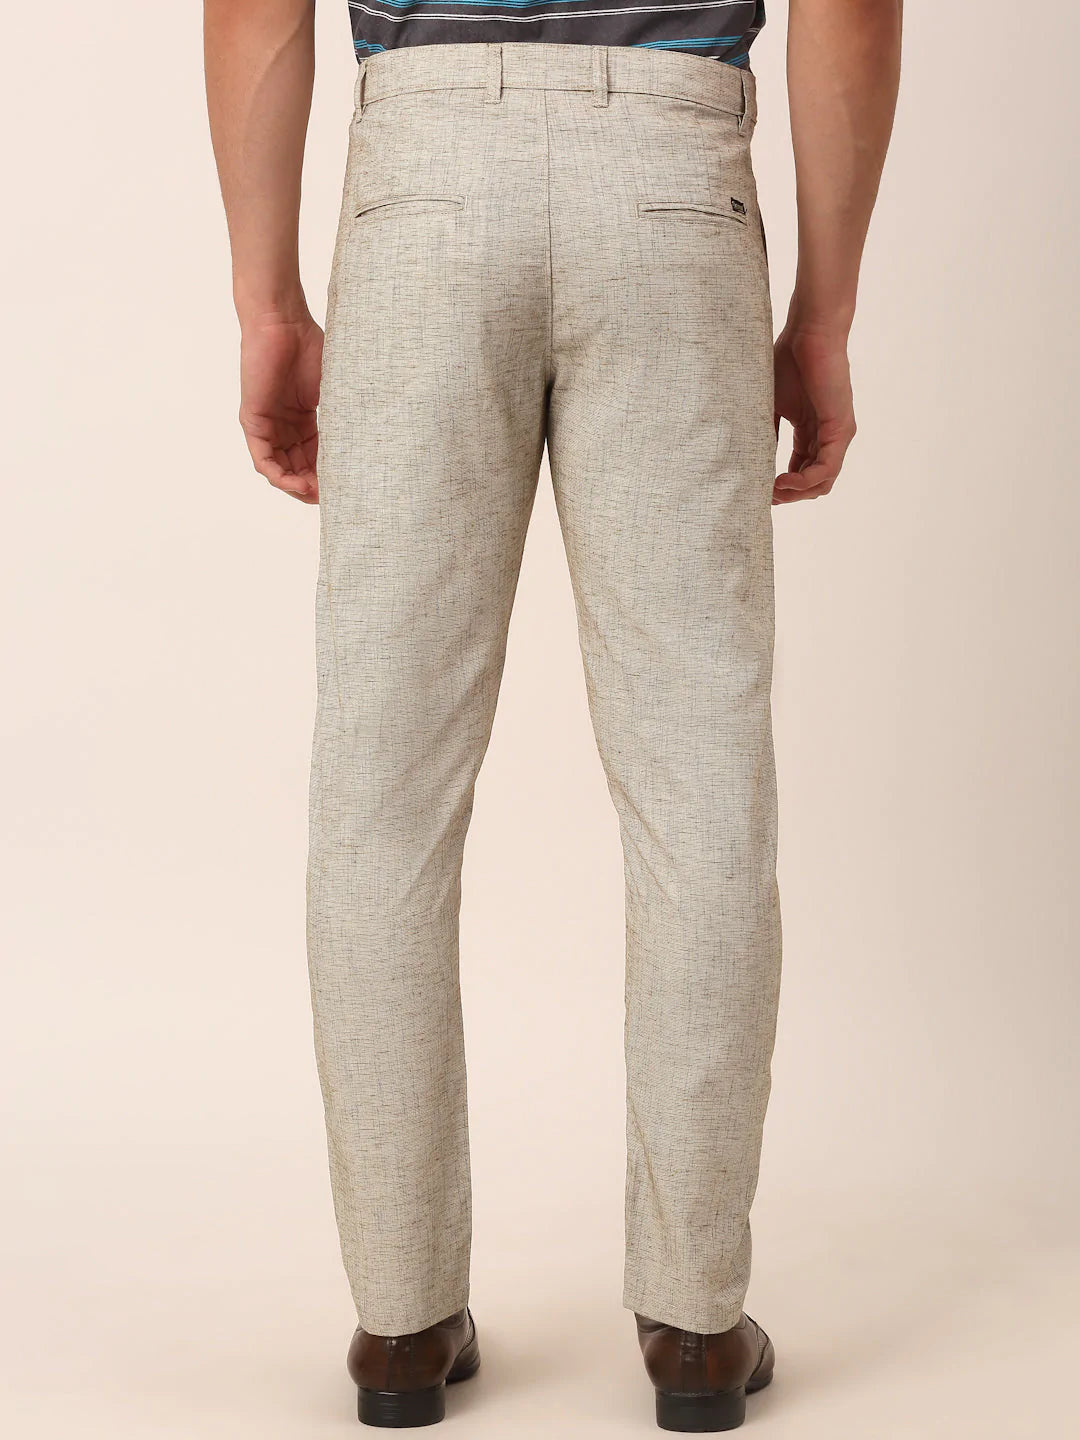 Jainish Men's Beige Linan Cotton Formal Trousers ( FGP 273 Beige )